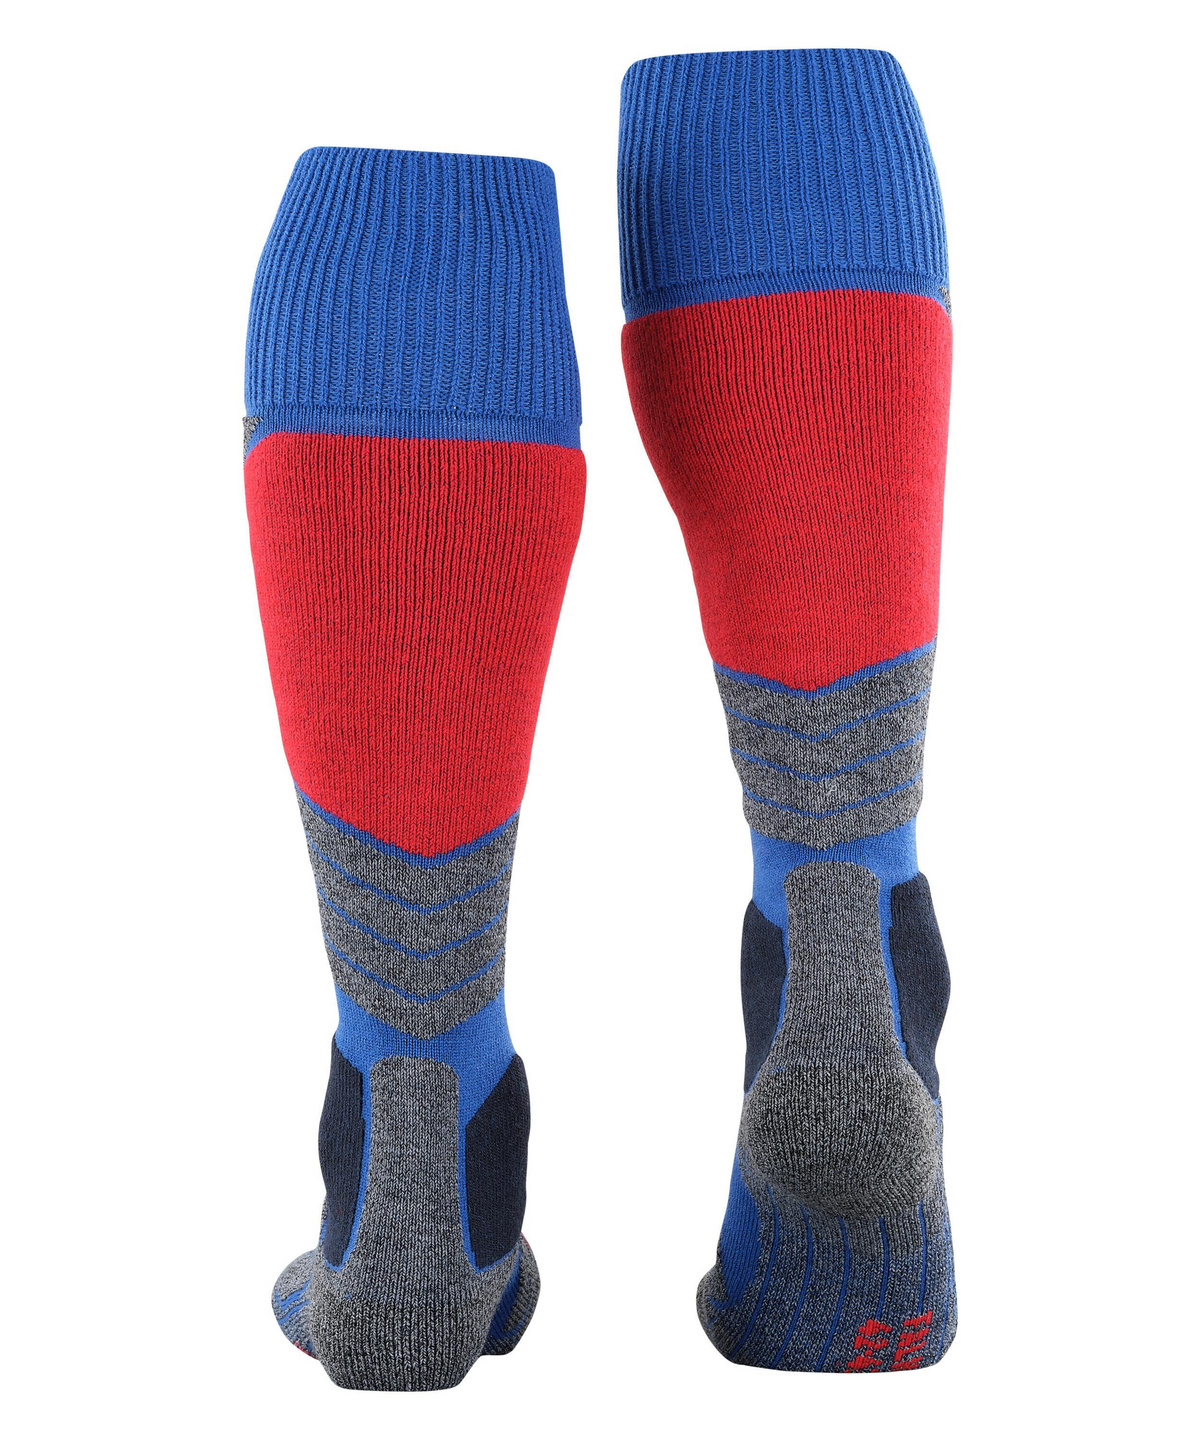 Falke Sk2 Wool Calcetines de Esquí para Hombre